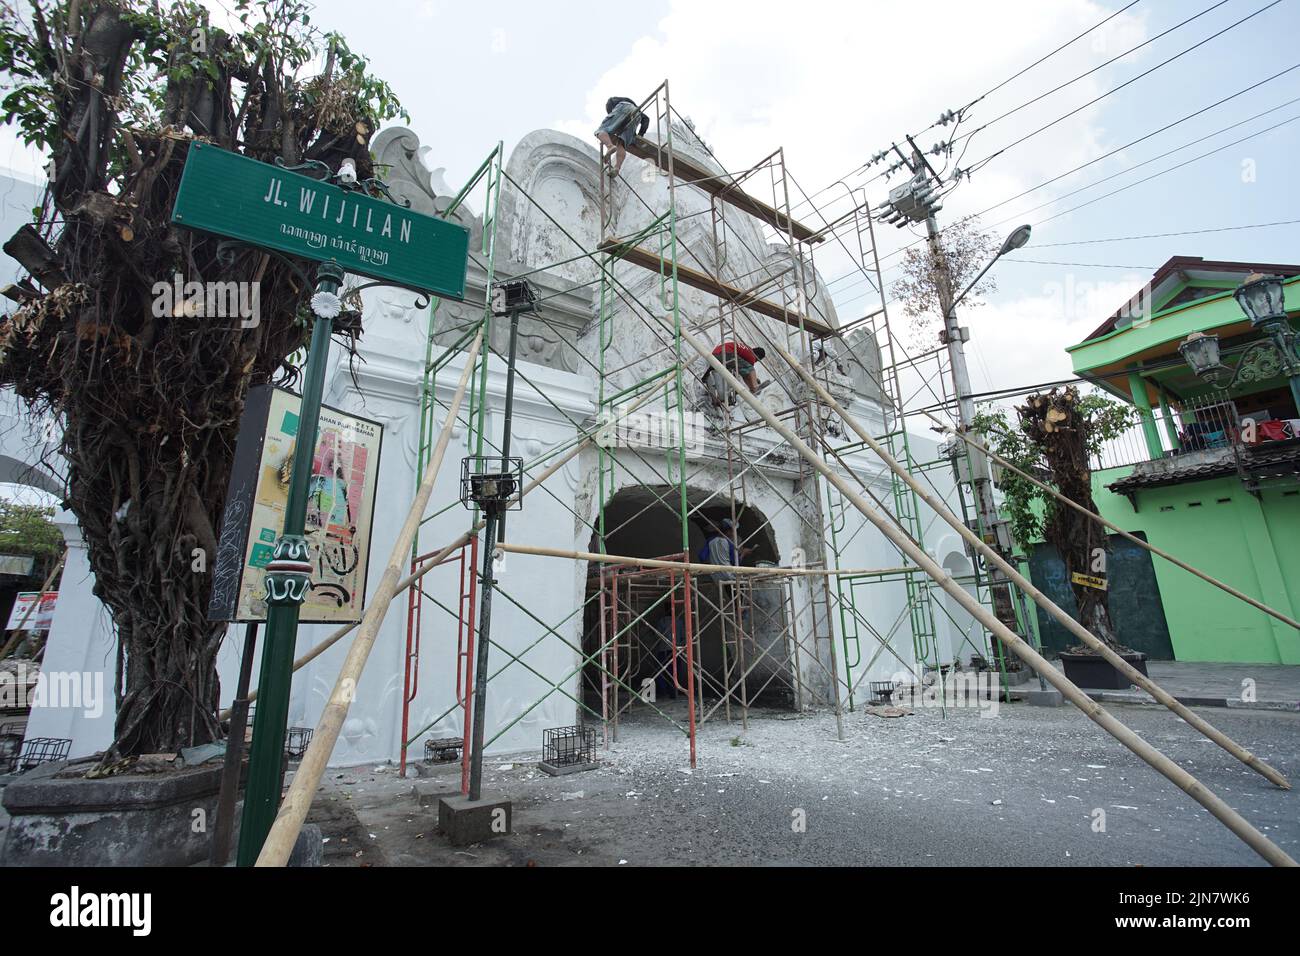 Yogyakarta, Indonesia - Circa 2018: Workers revitalize heritage building of Plengkung Wijilan. Stock Photo